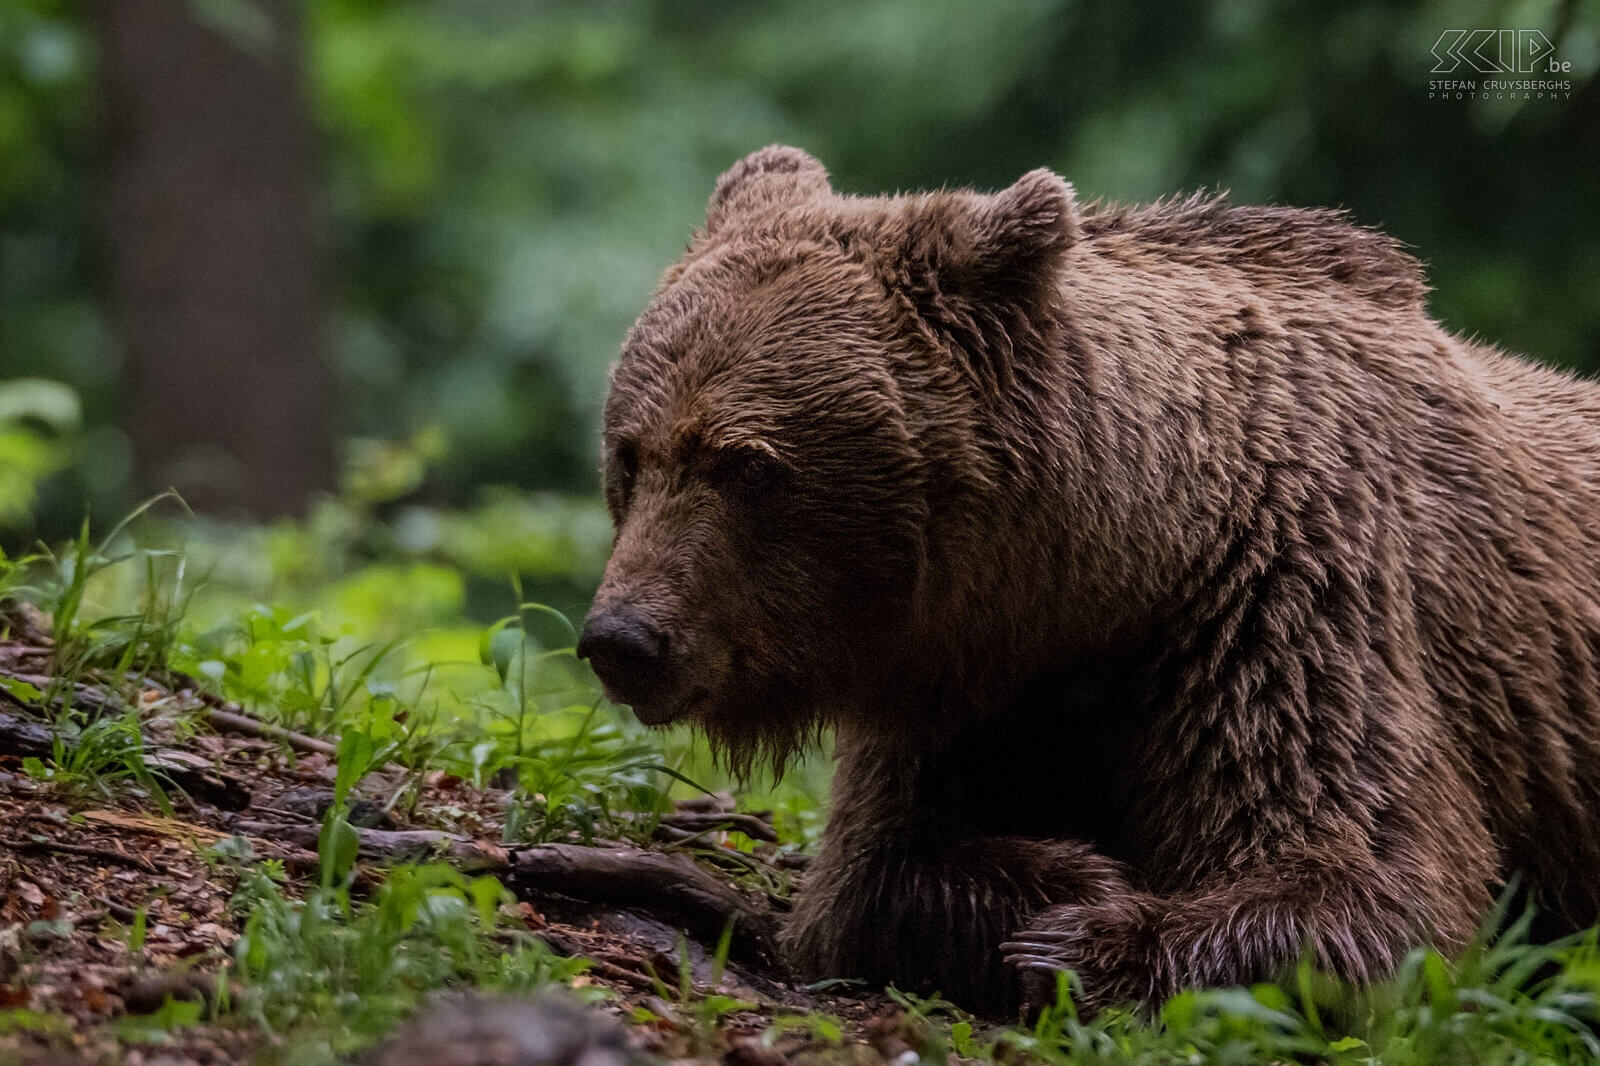 Notranjska - Adult brown bear  Stefan Cruysberghs